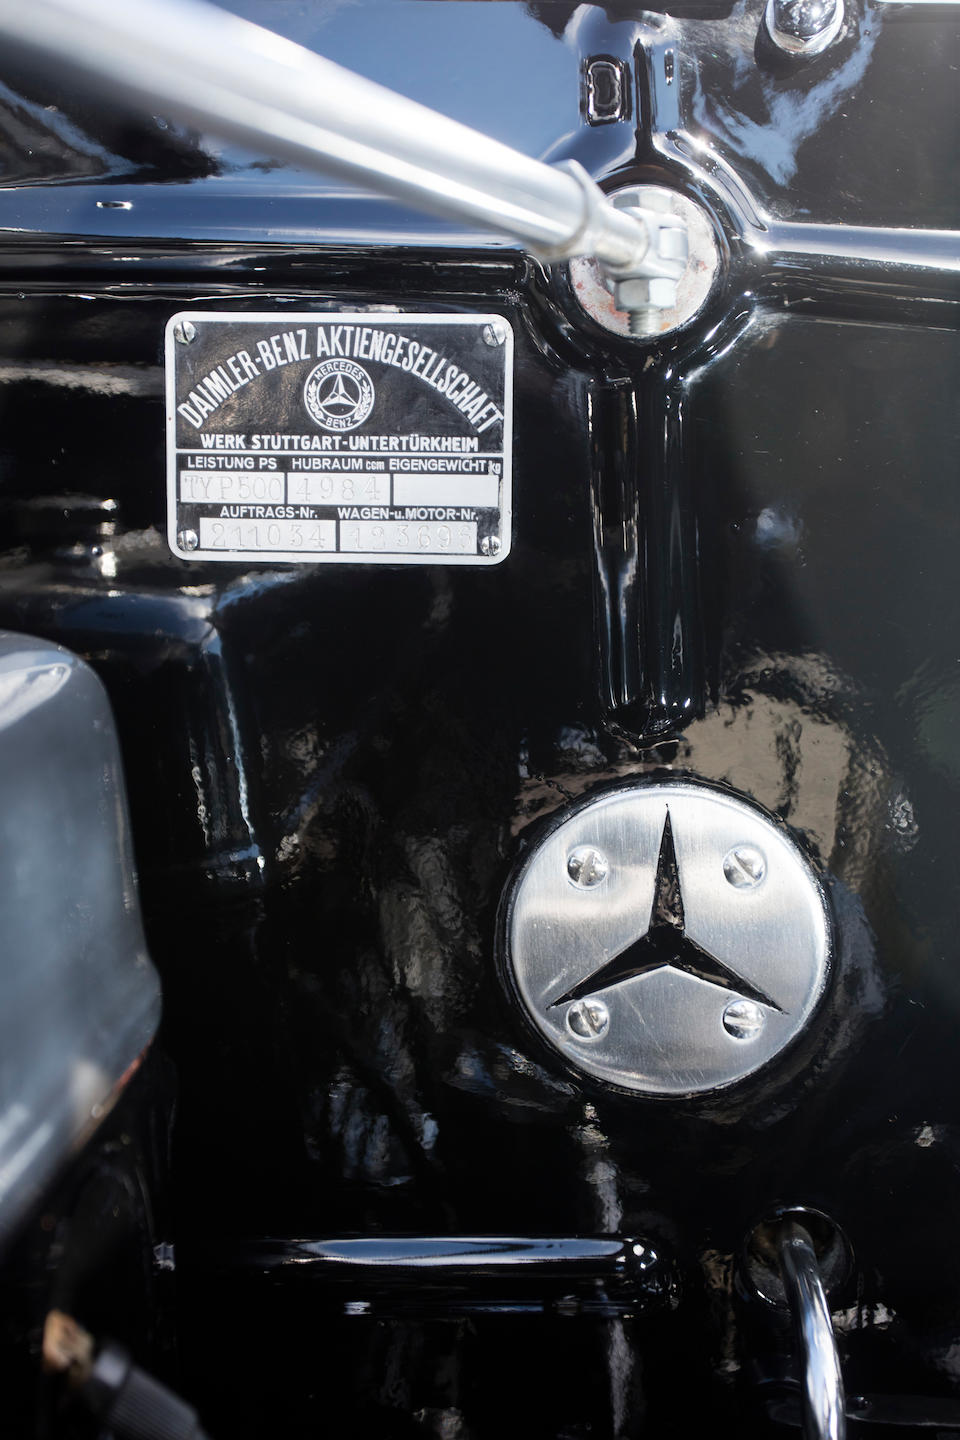 Featured at the Paris Auto Show Ex-Richard Croxton Adams ,1935 Mercedes-Benz 500 K Cabriolet  Chassis no. 123696 Engine no. 102405.38 123696